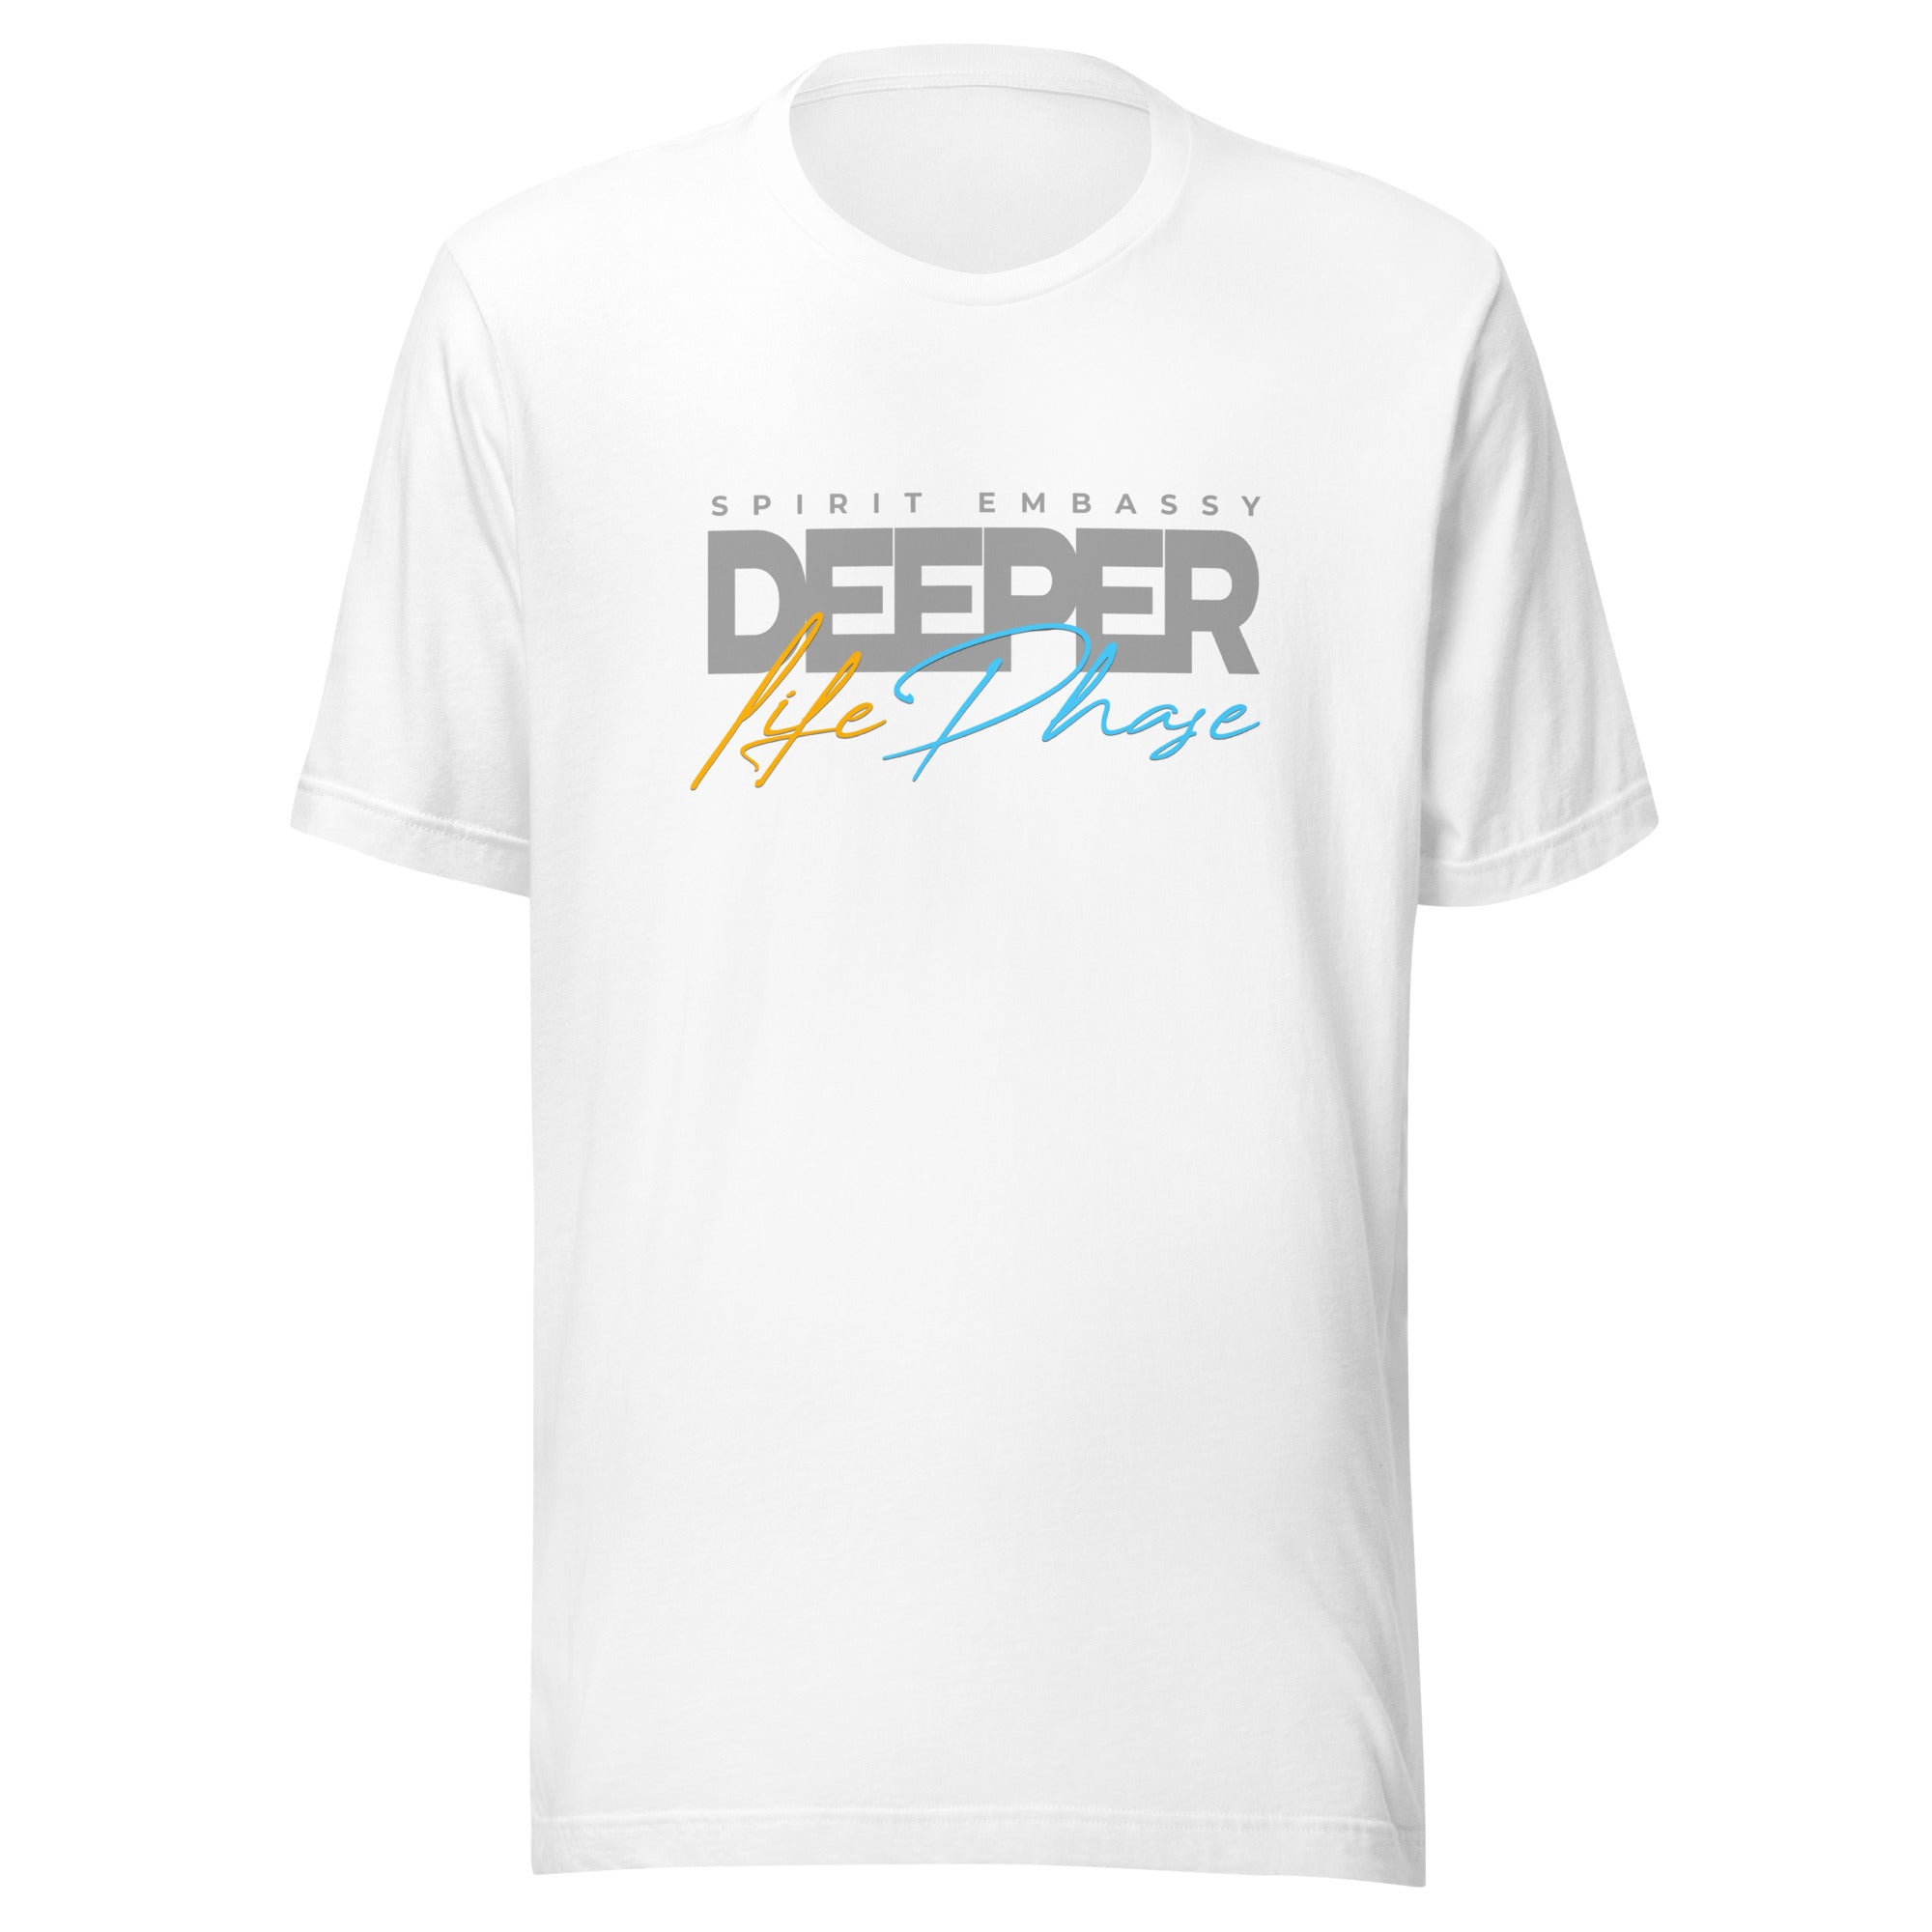 Deeper Life Phase T-shirt